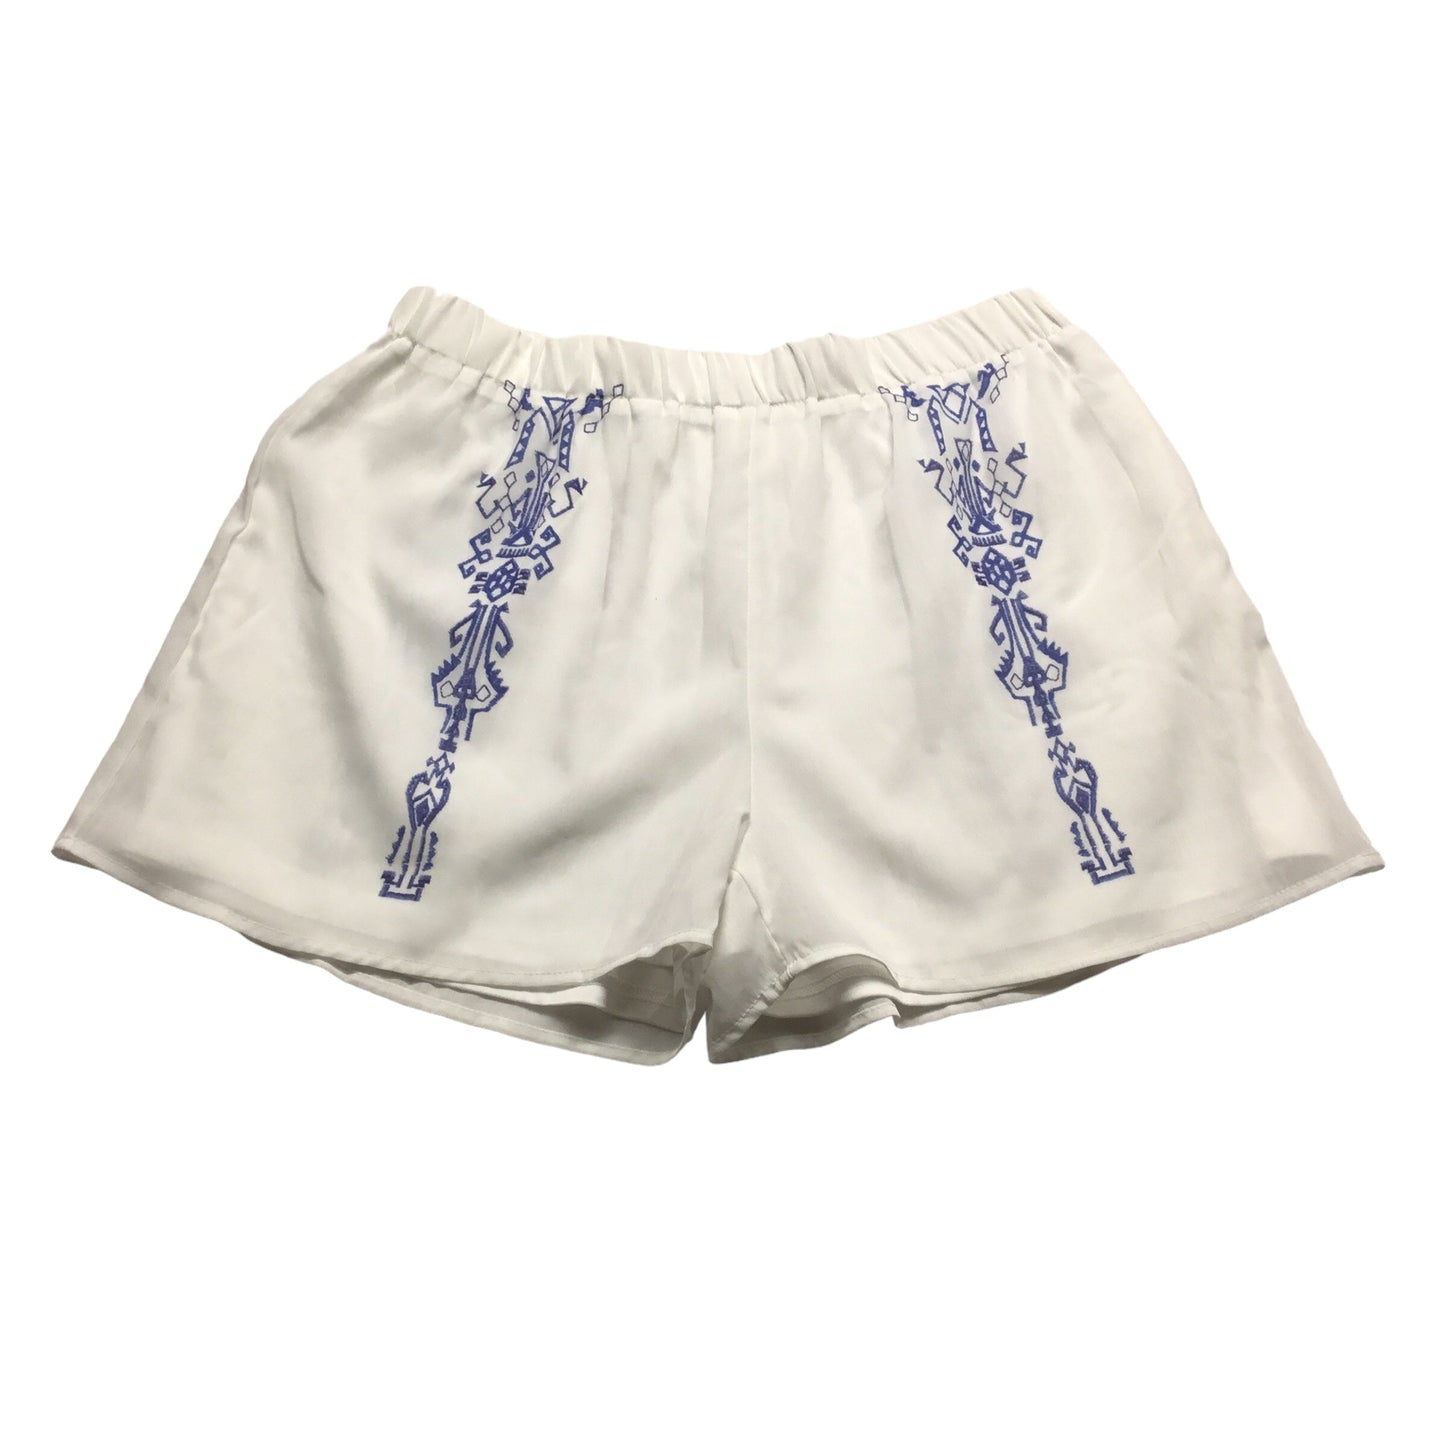 Blue & White Shorts Clothes Mentor, Size Xl